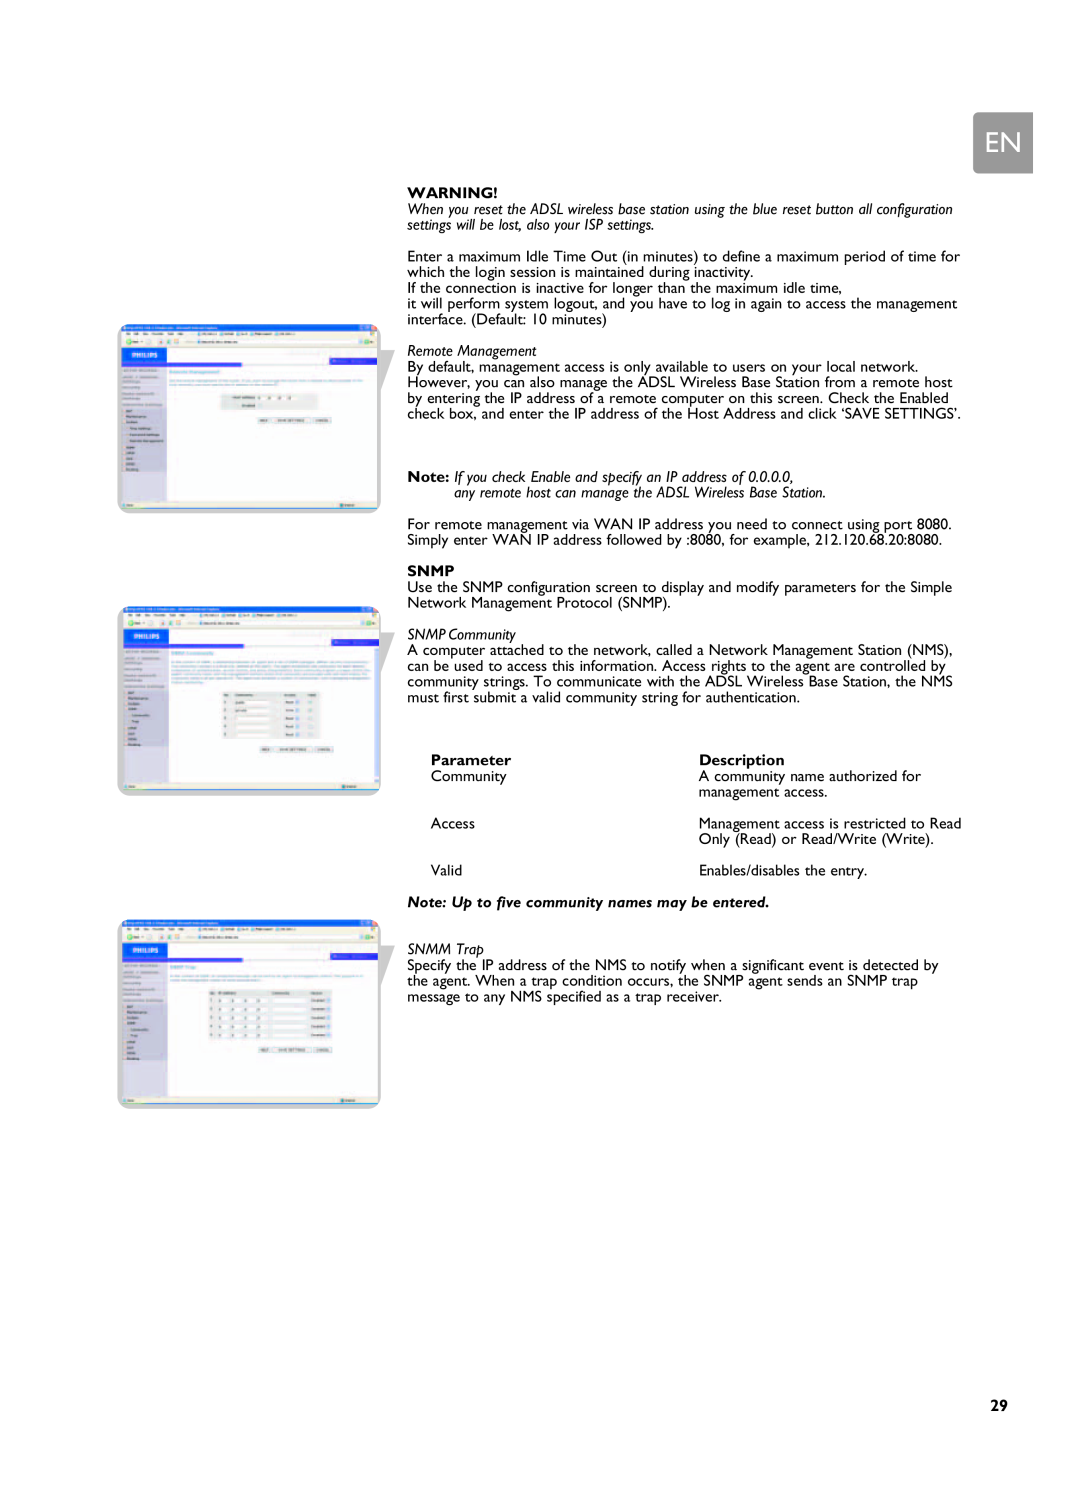 Philips SNA6500 user manual Remote Management, Snmp, SNMP Community, Parameter, Description, SNMM Trap 